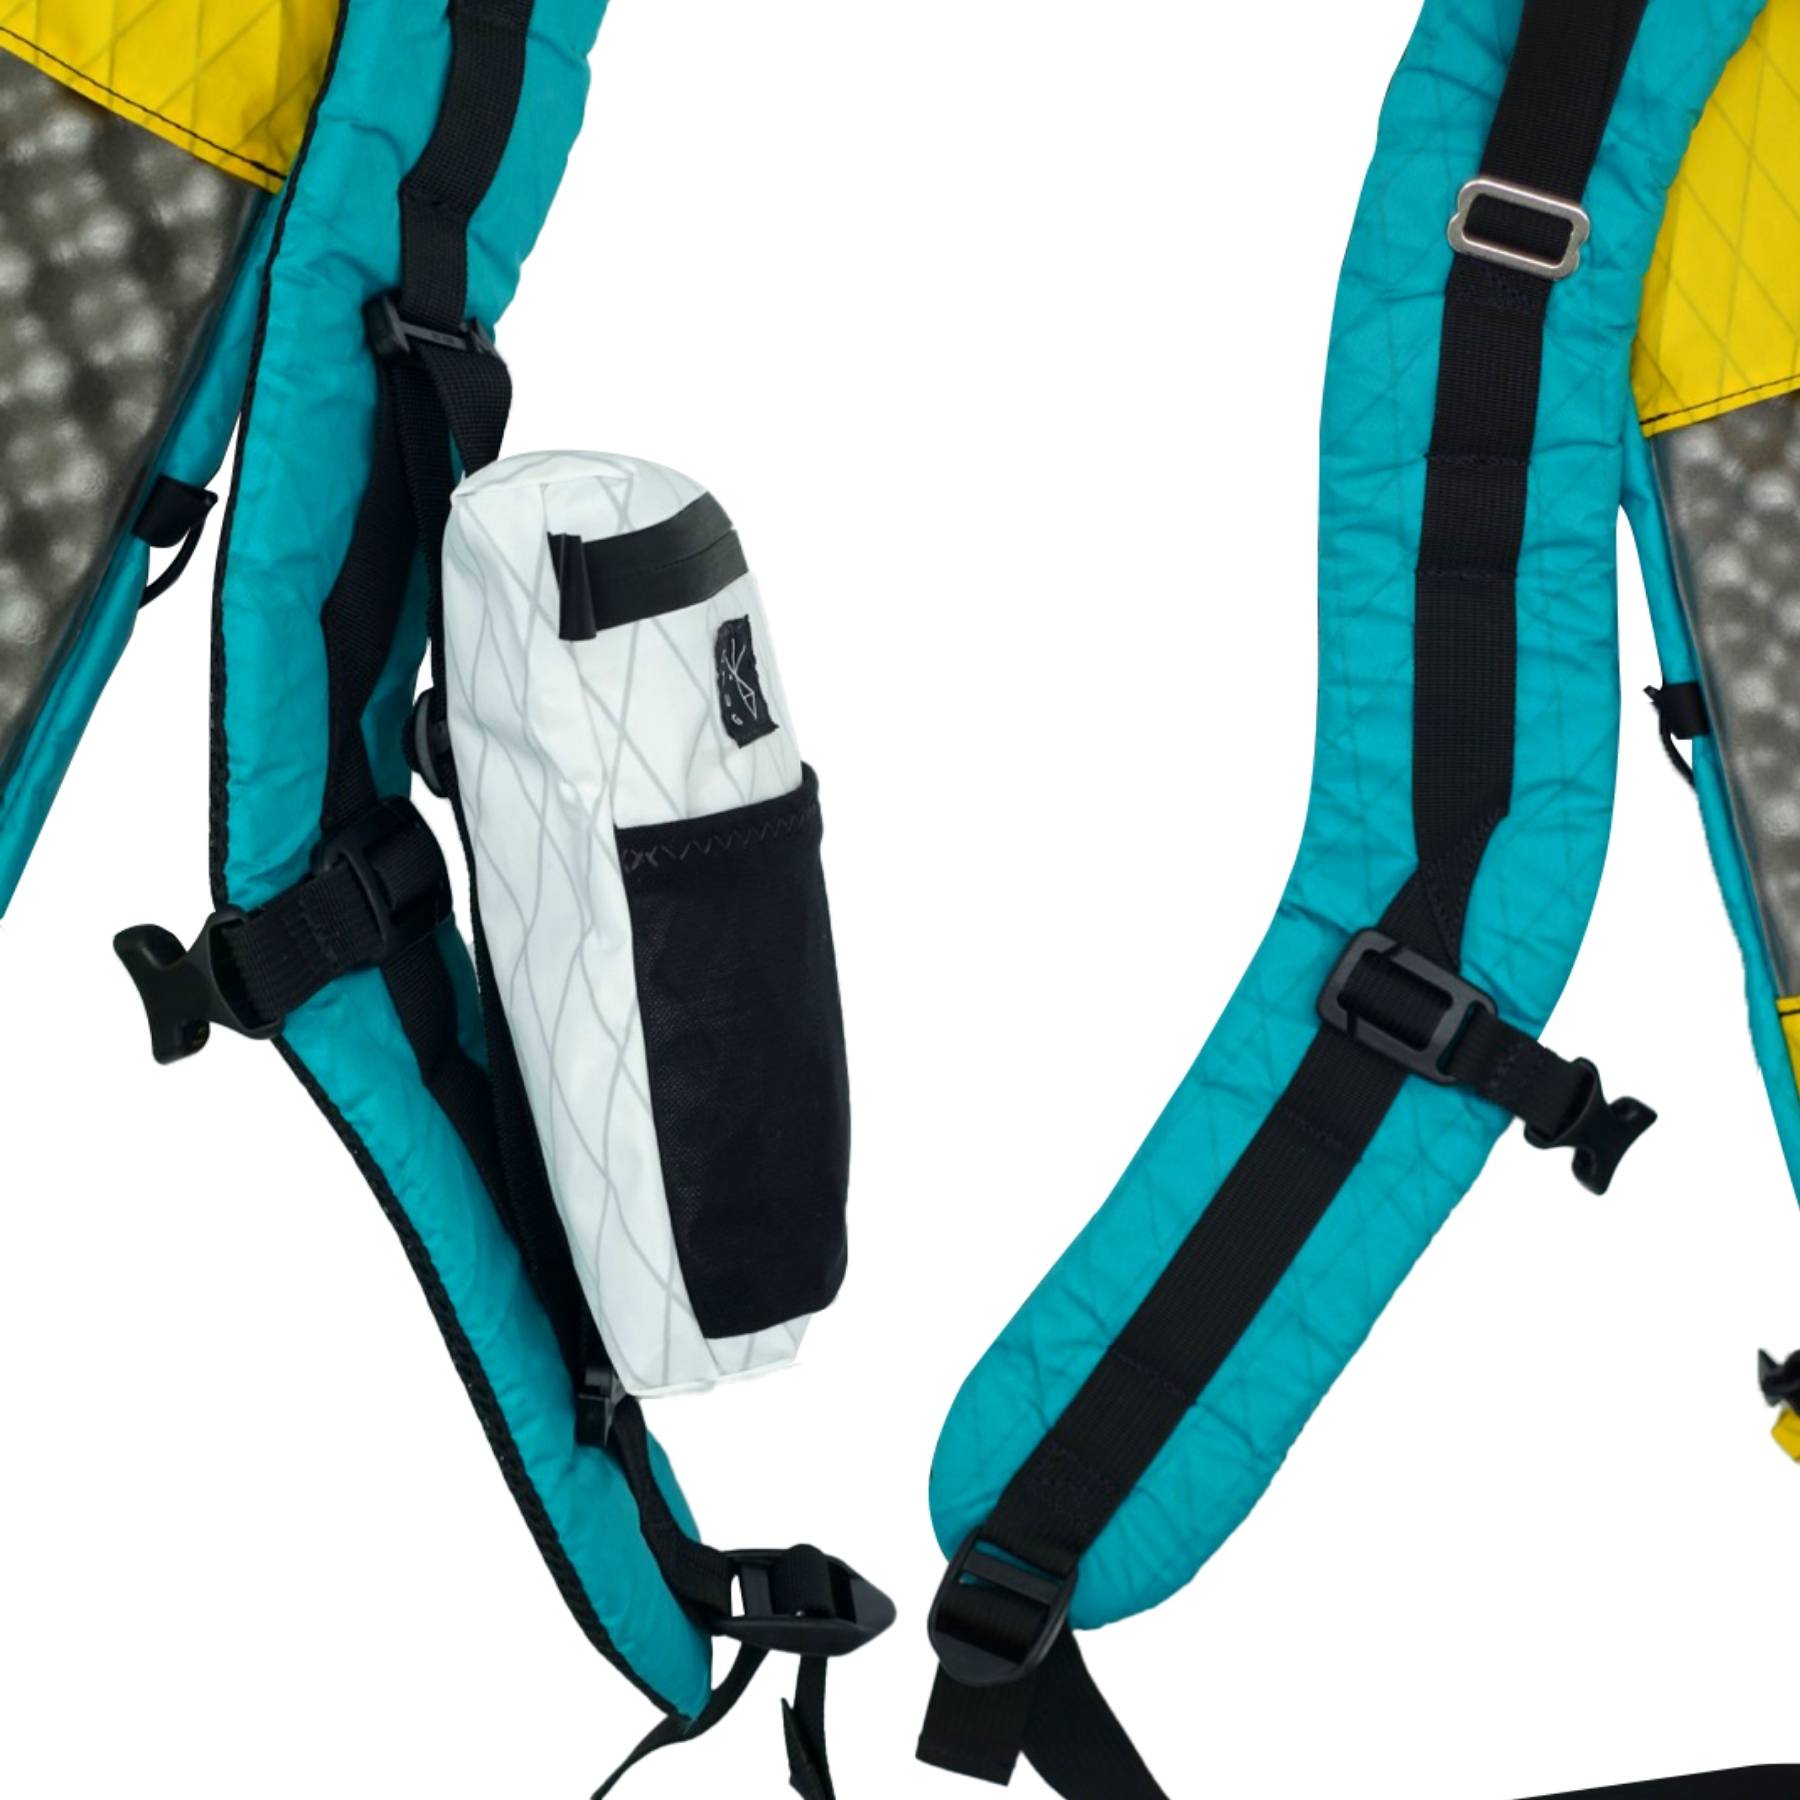  cfpolar Anchor Rudder Striped Portable Backpack for